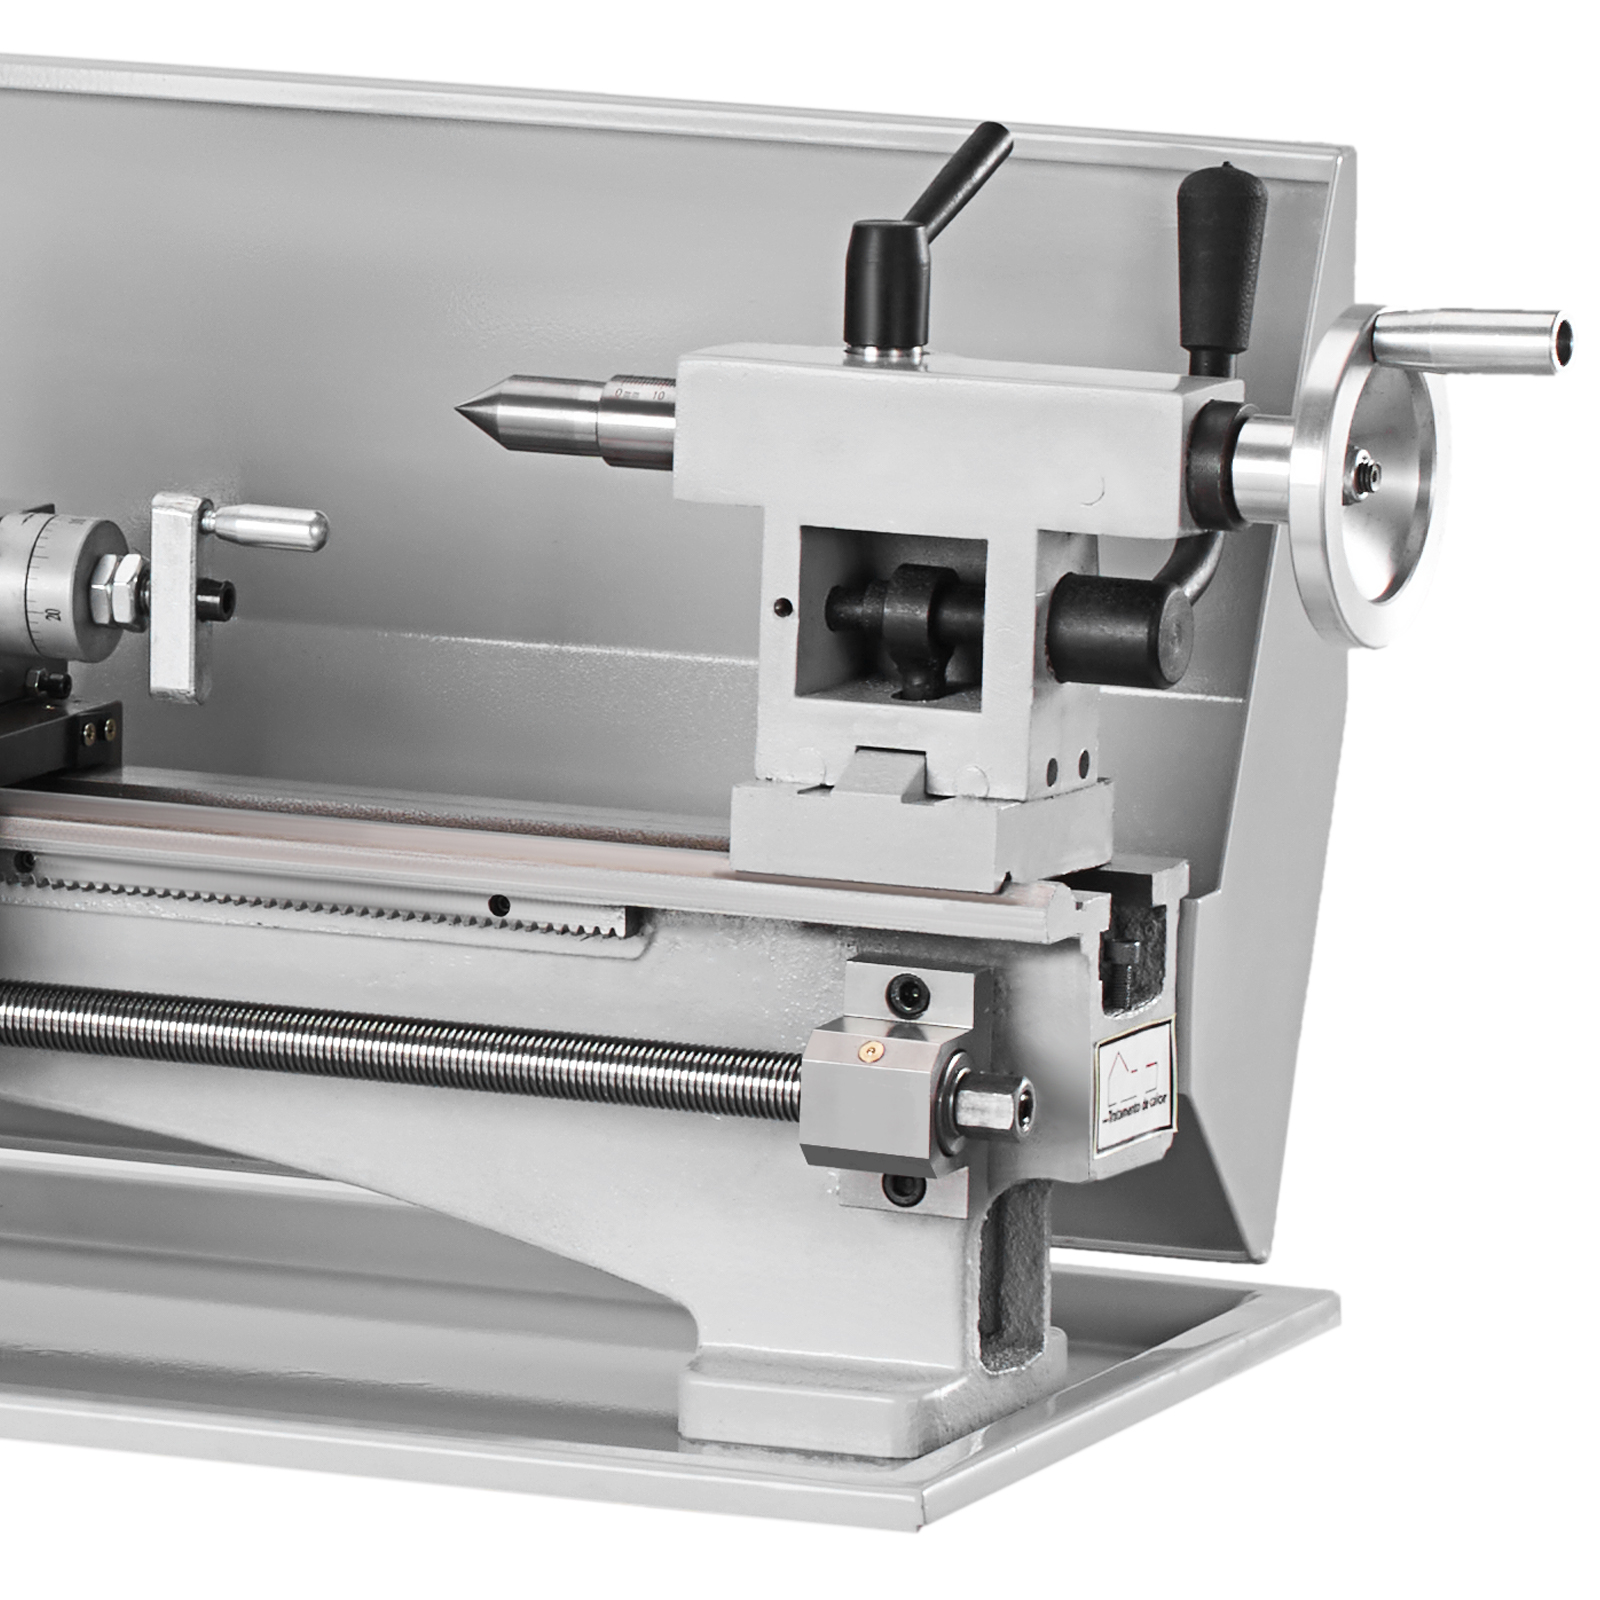  Znnam Mini prensa de perforación de precisión de sobremesa de 7  velocidades variables Elecric portátil taladro de mesa para bricolaje metal  madera, joyería y otras manualidades CNC 795 Motor B10 Mini 